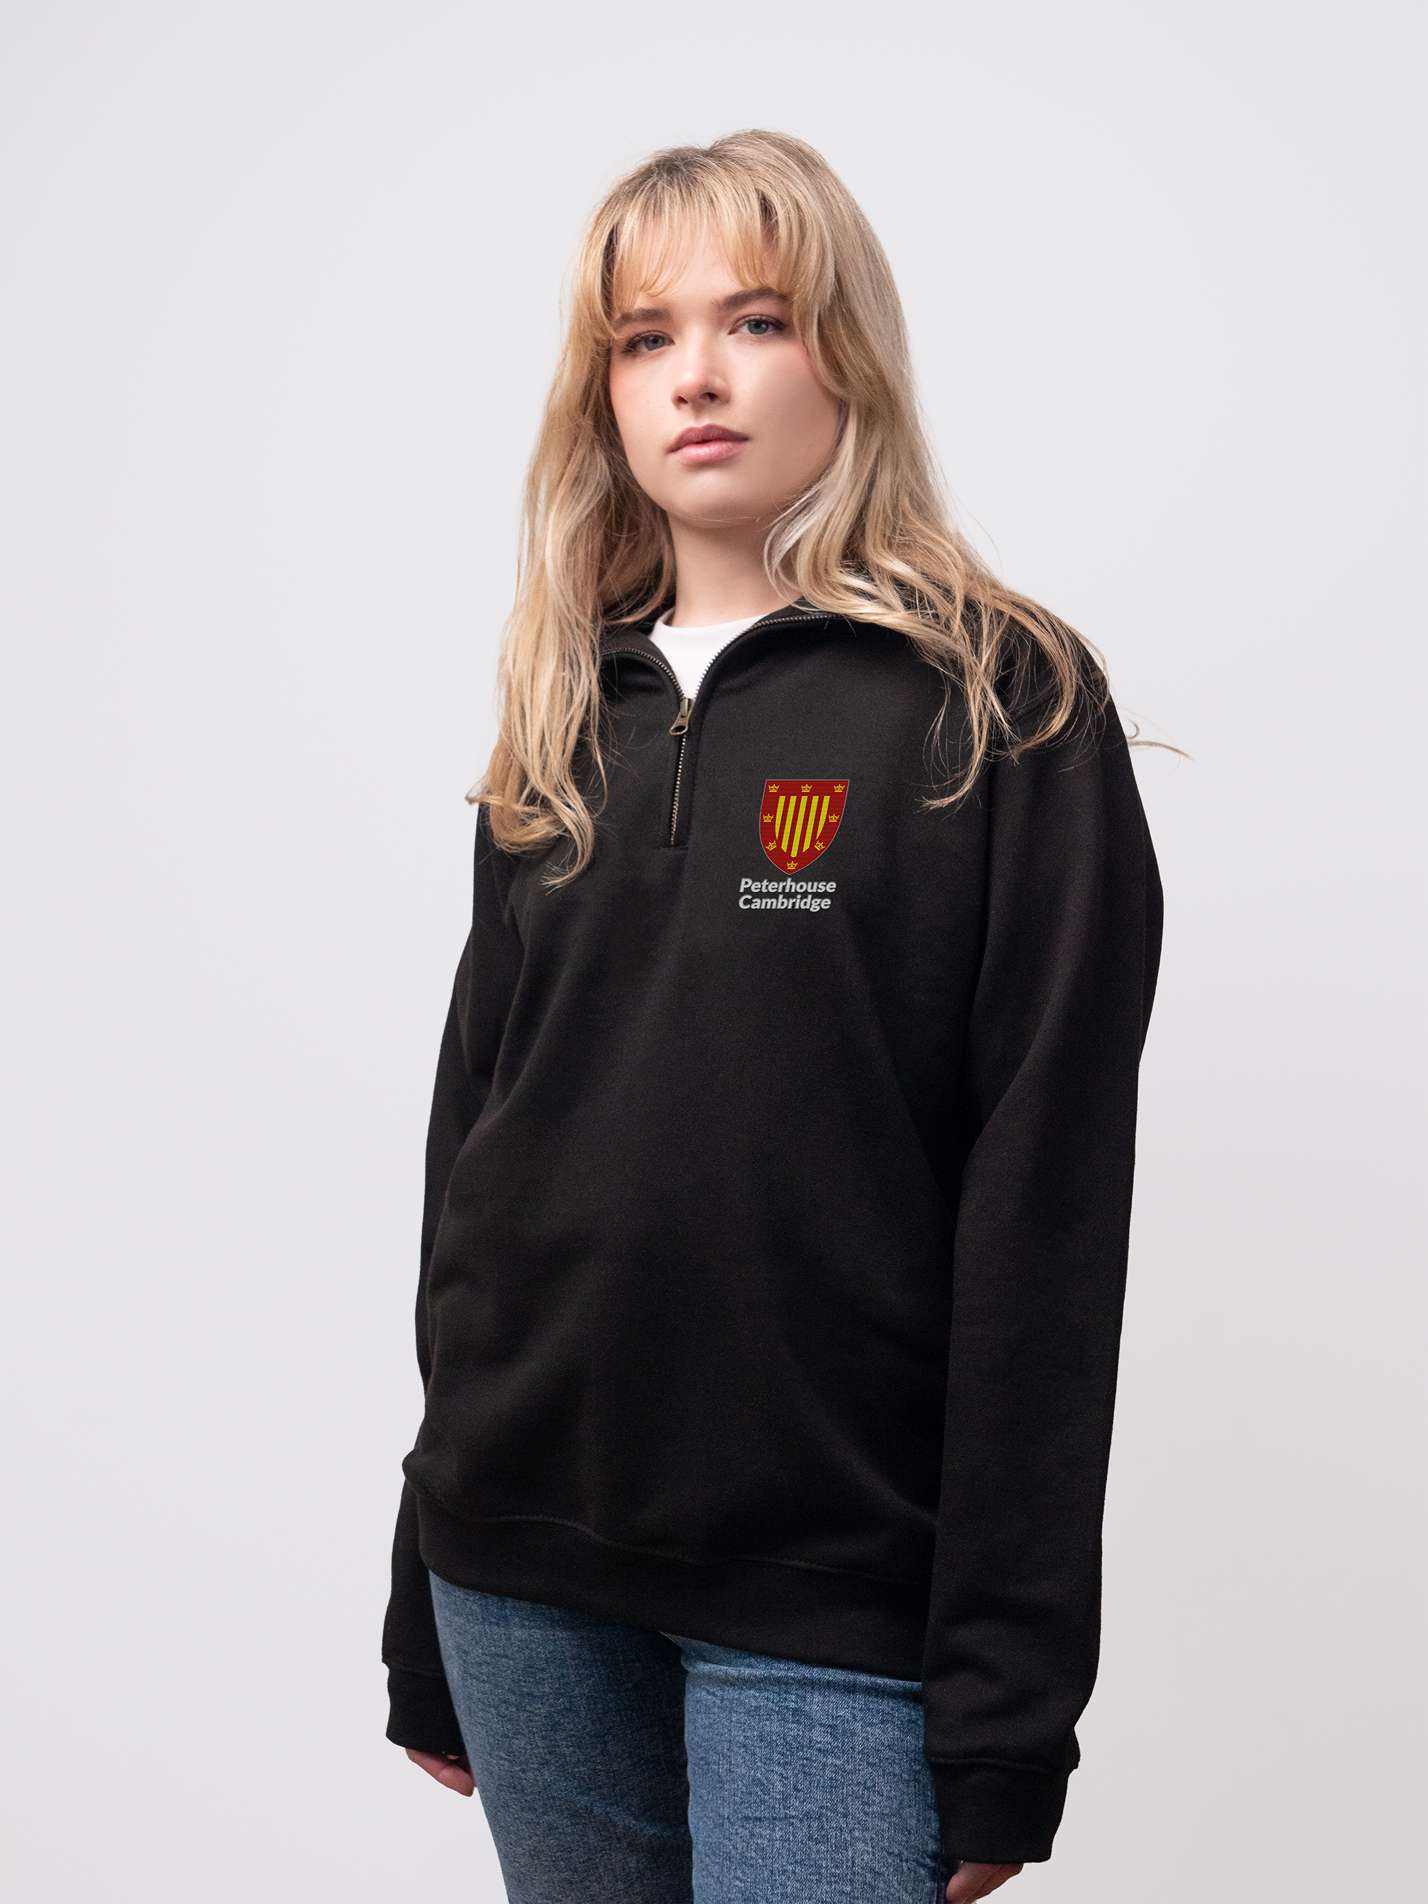 Peterhouse student wearing a black 1/4 zip sweatshirt 